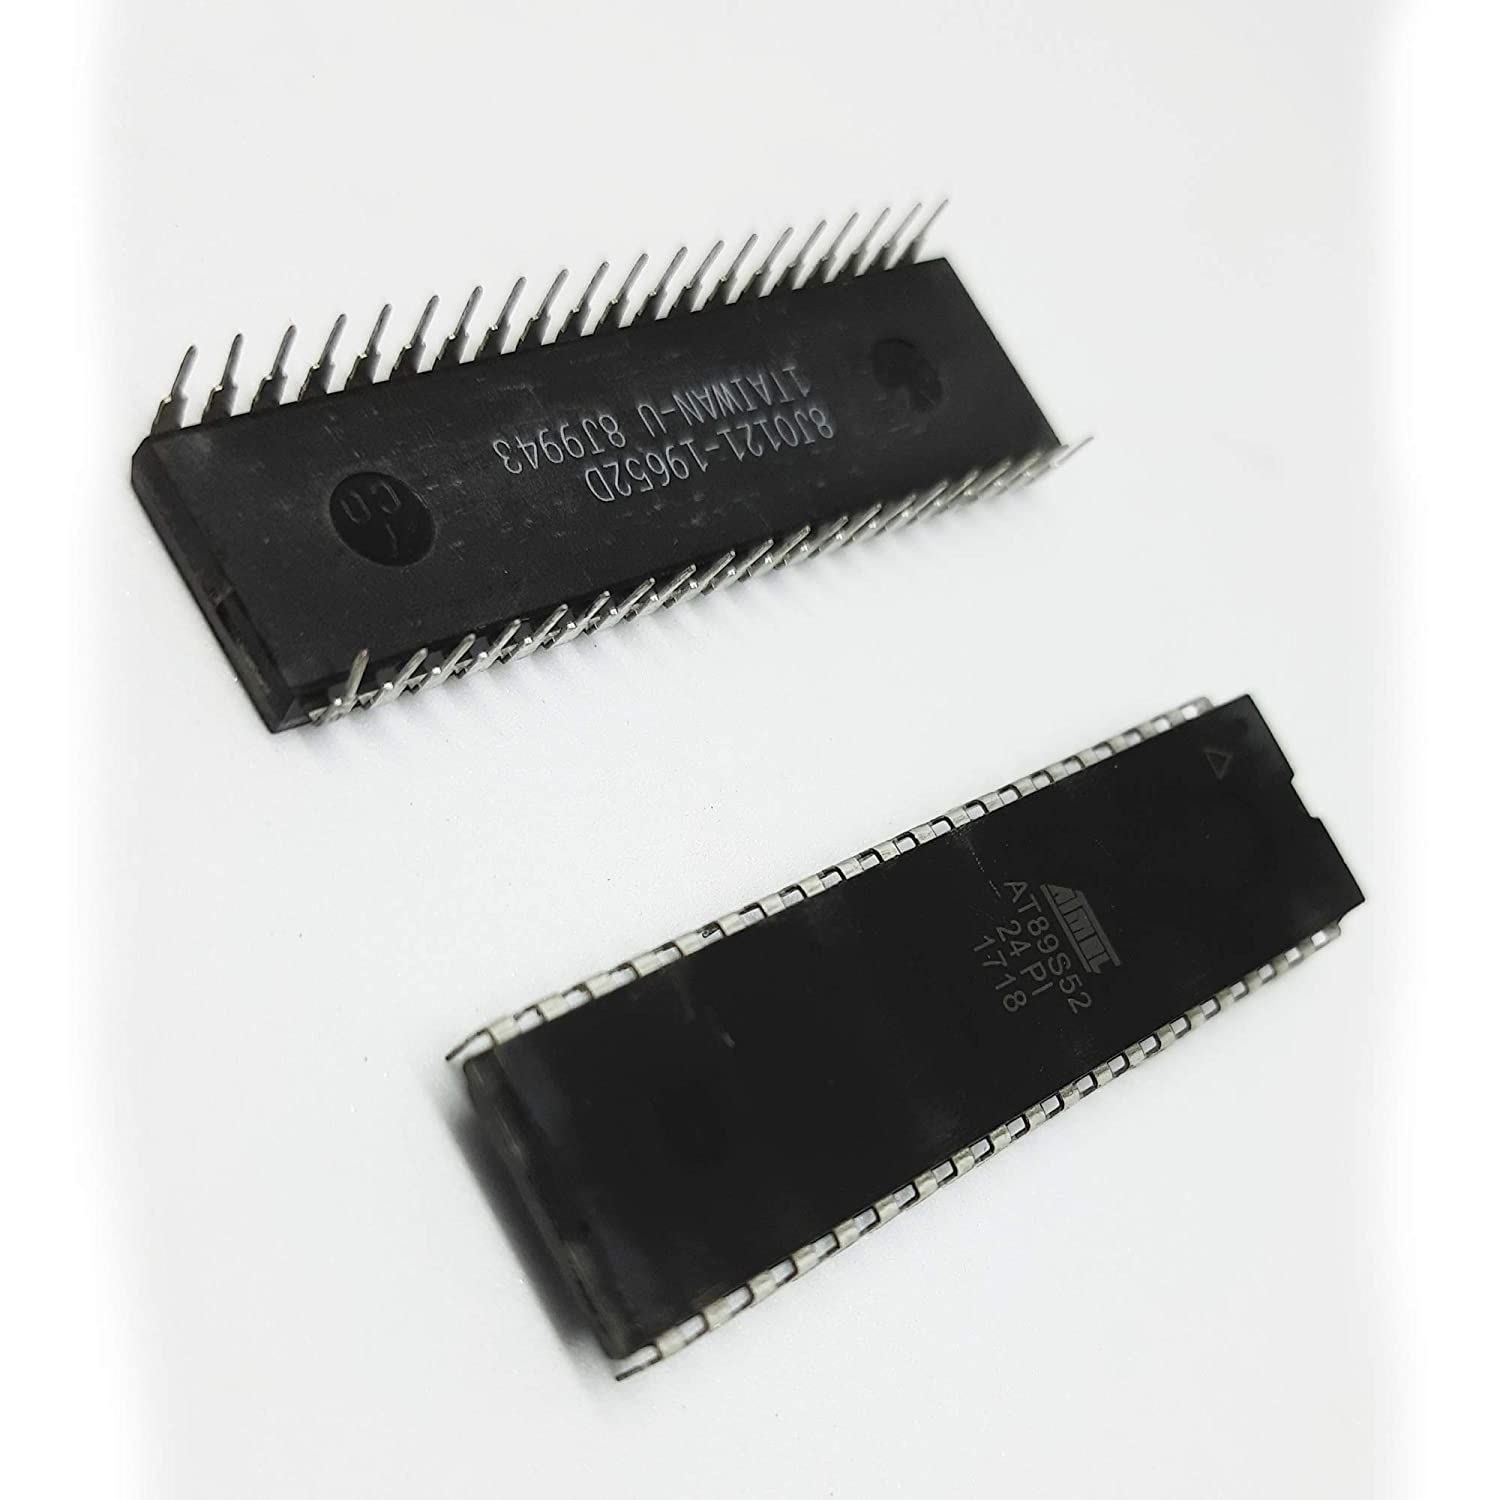 AT 89S52 IC ATMEL 8051 Microcontroller 40 Pin DIP